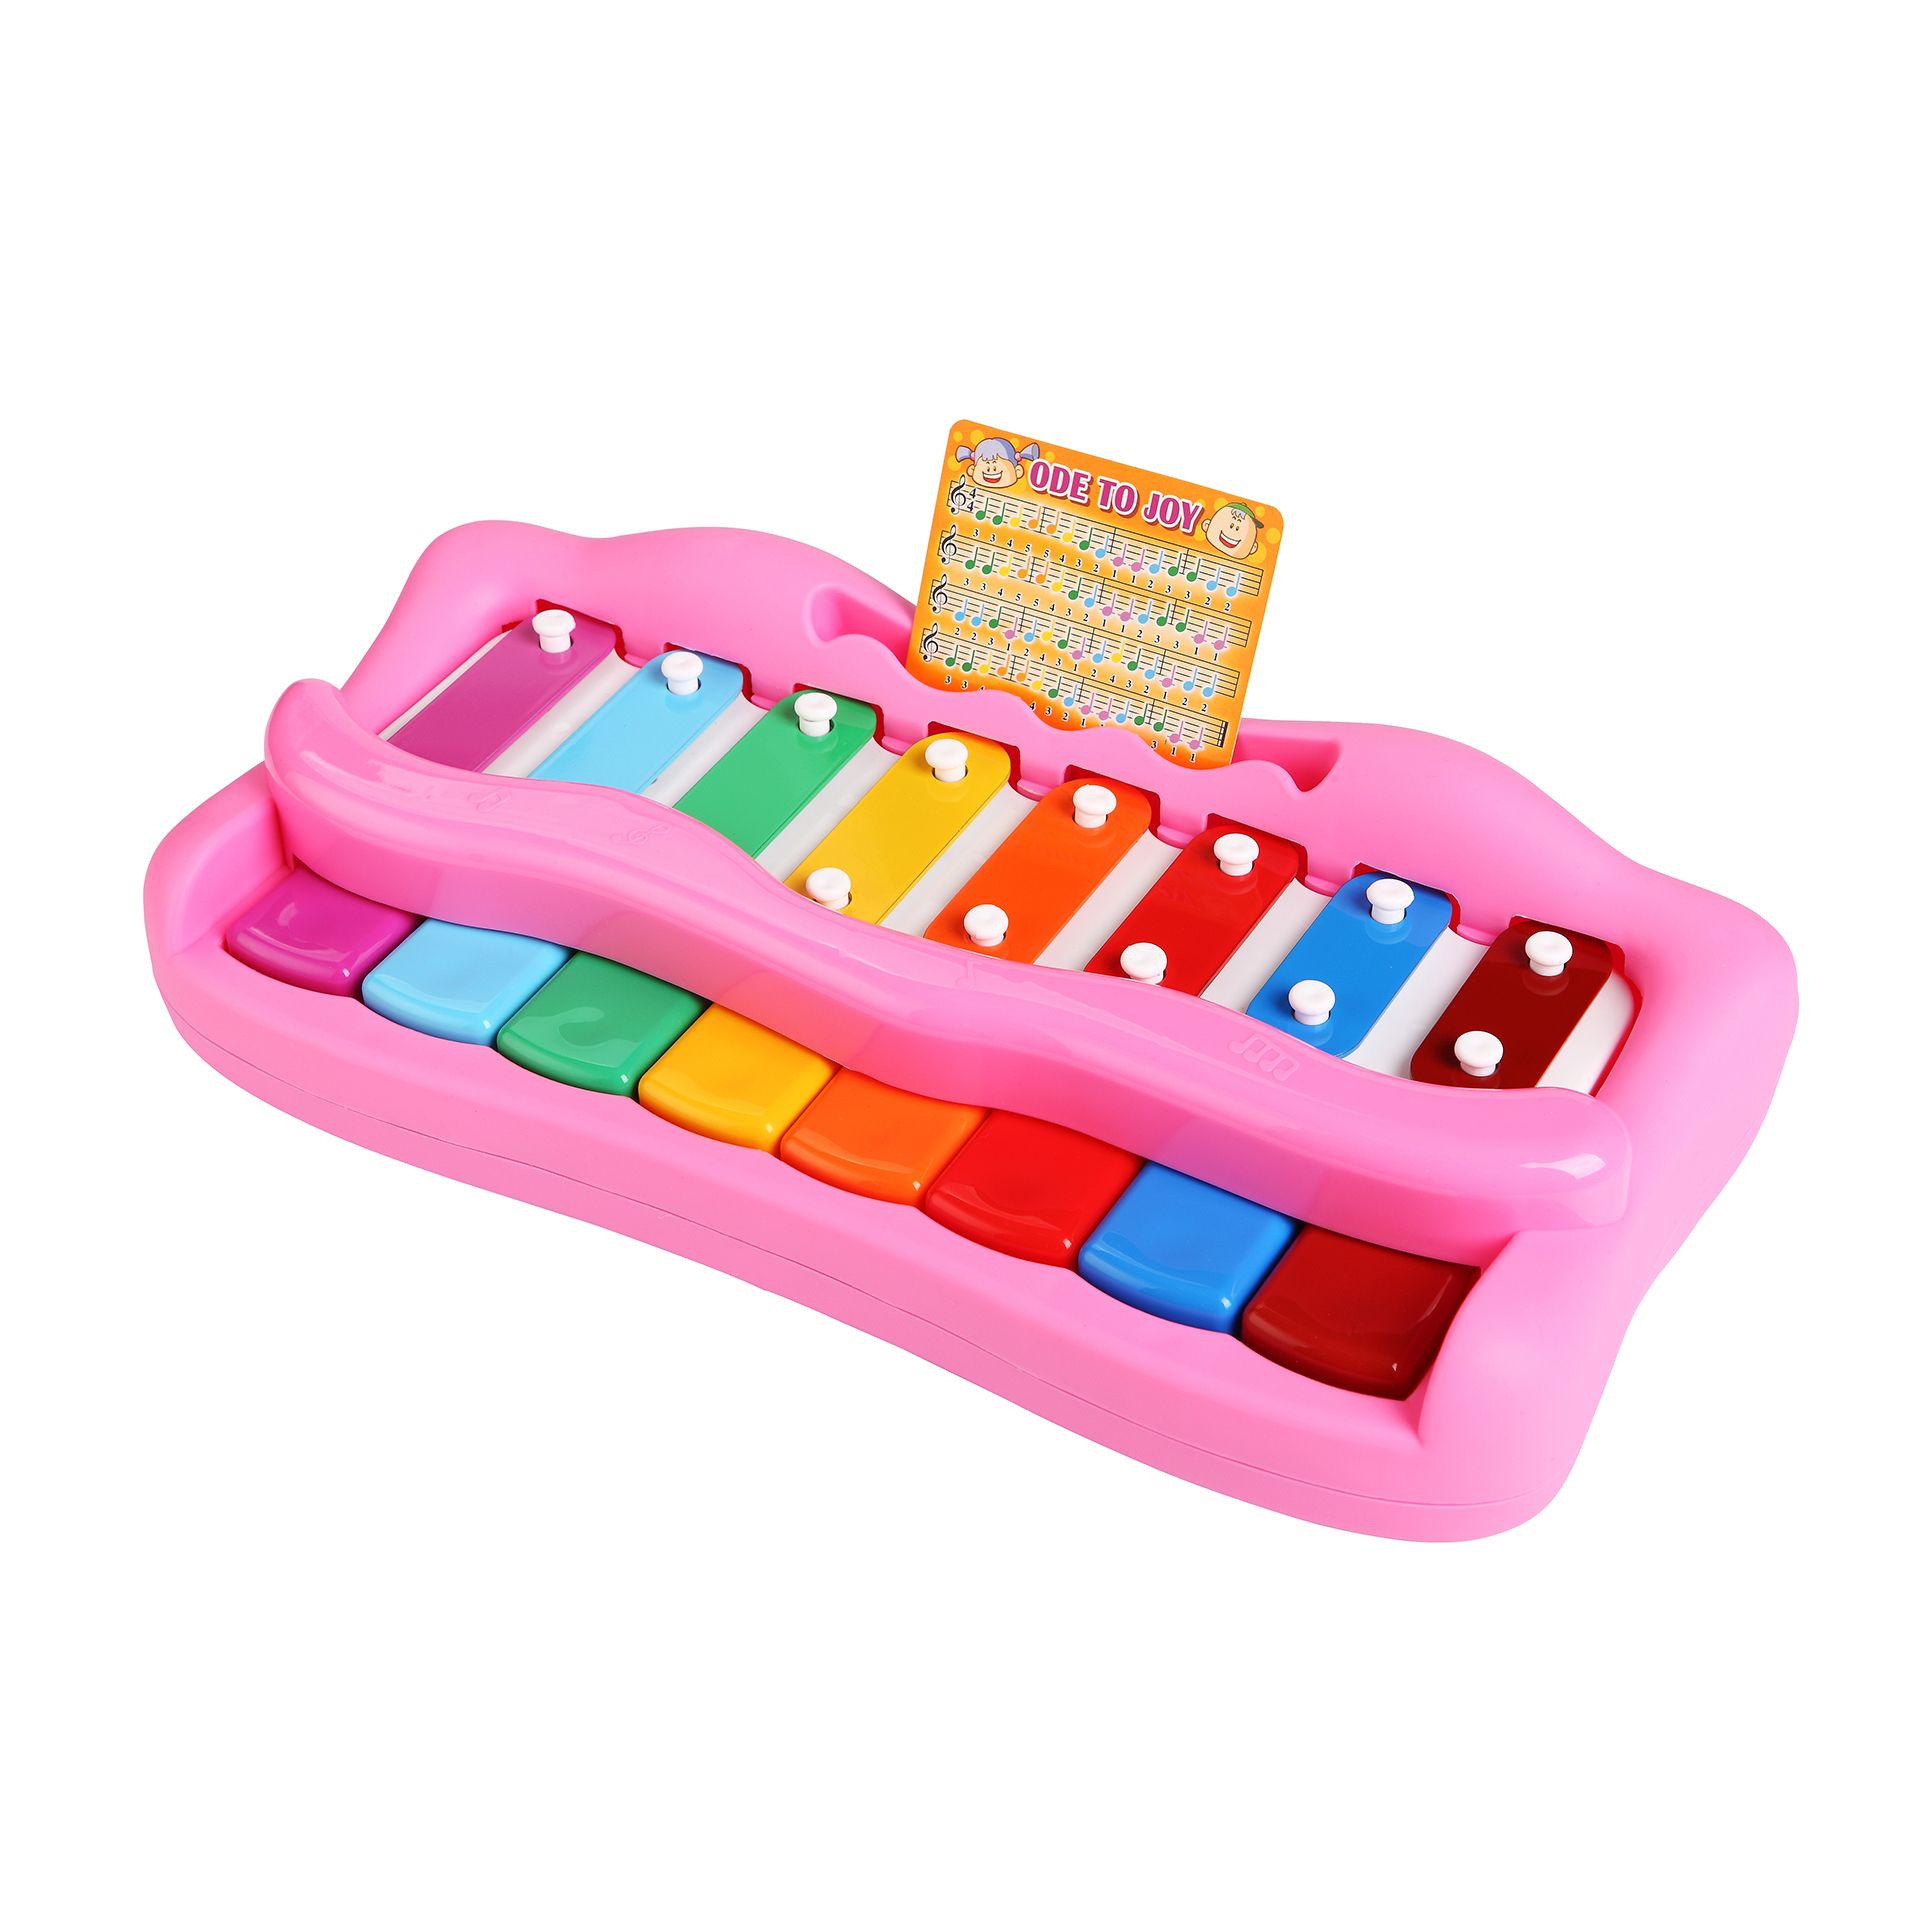 keys xylophone for kids